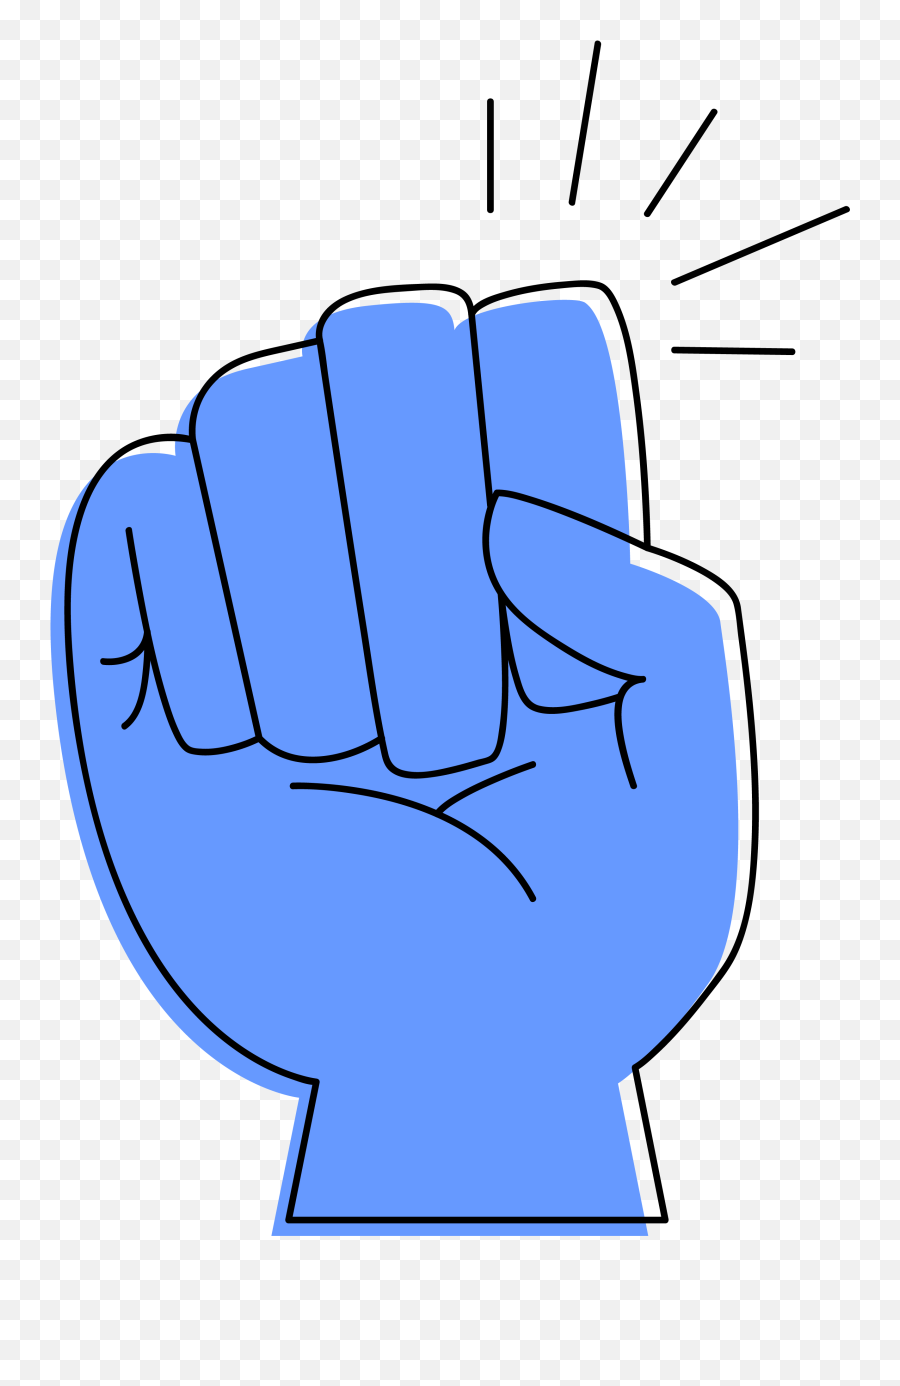 Ashakiran - A Ray Of Hope Fist Emoji,Emoticon Gesture Hands Up